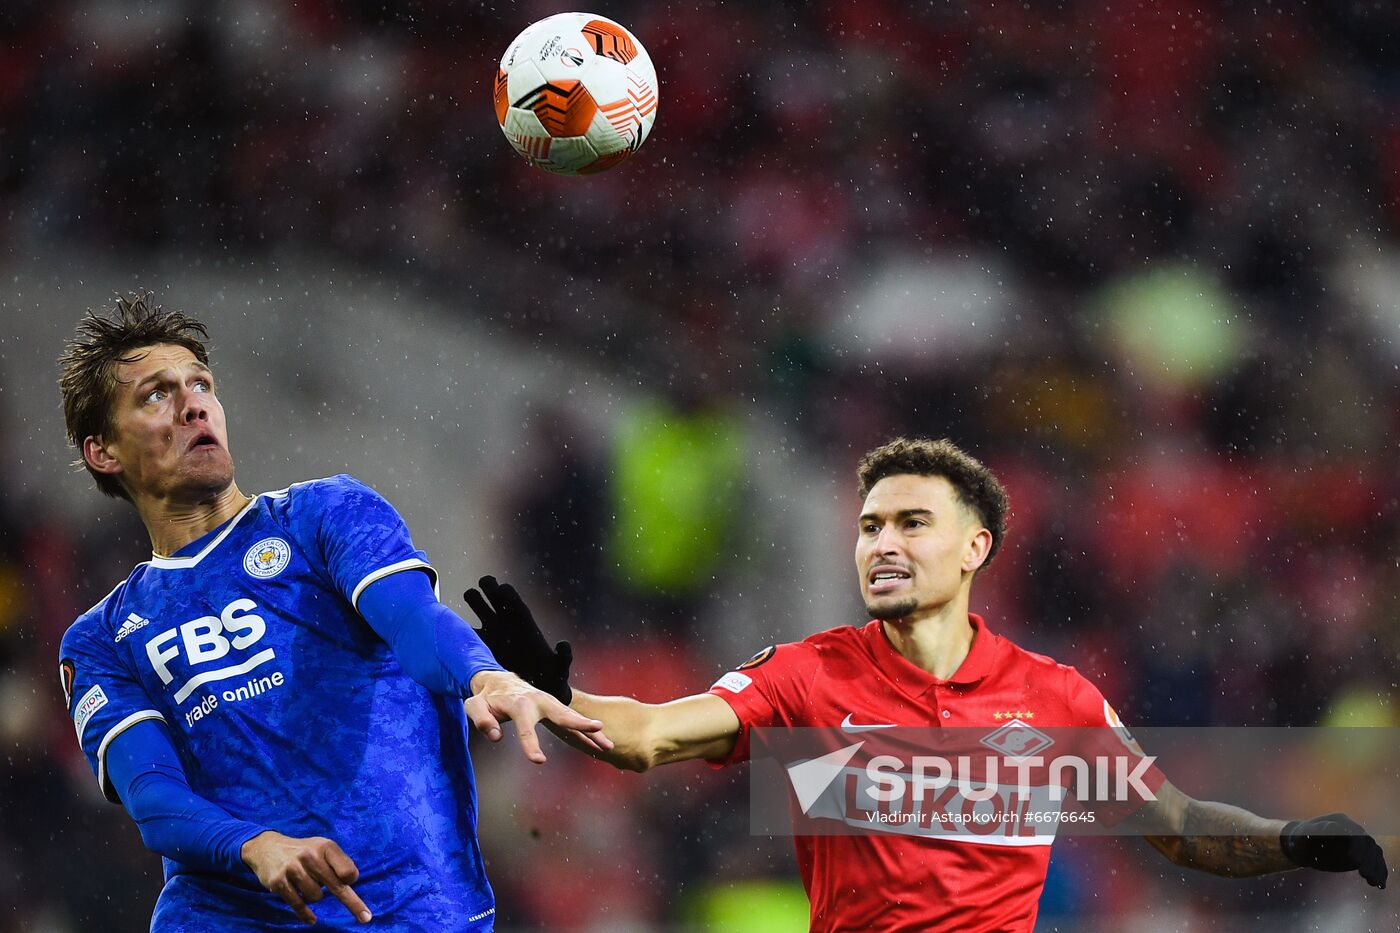 Russia Soccer Europa League Spartak - Leicester